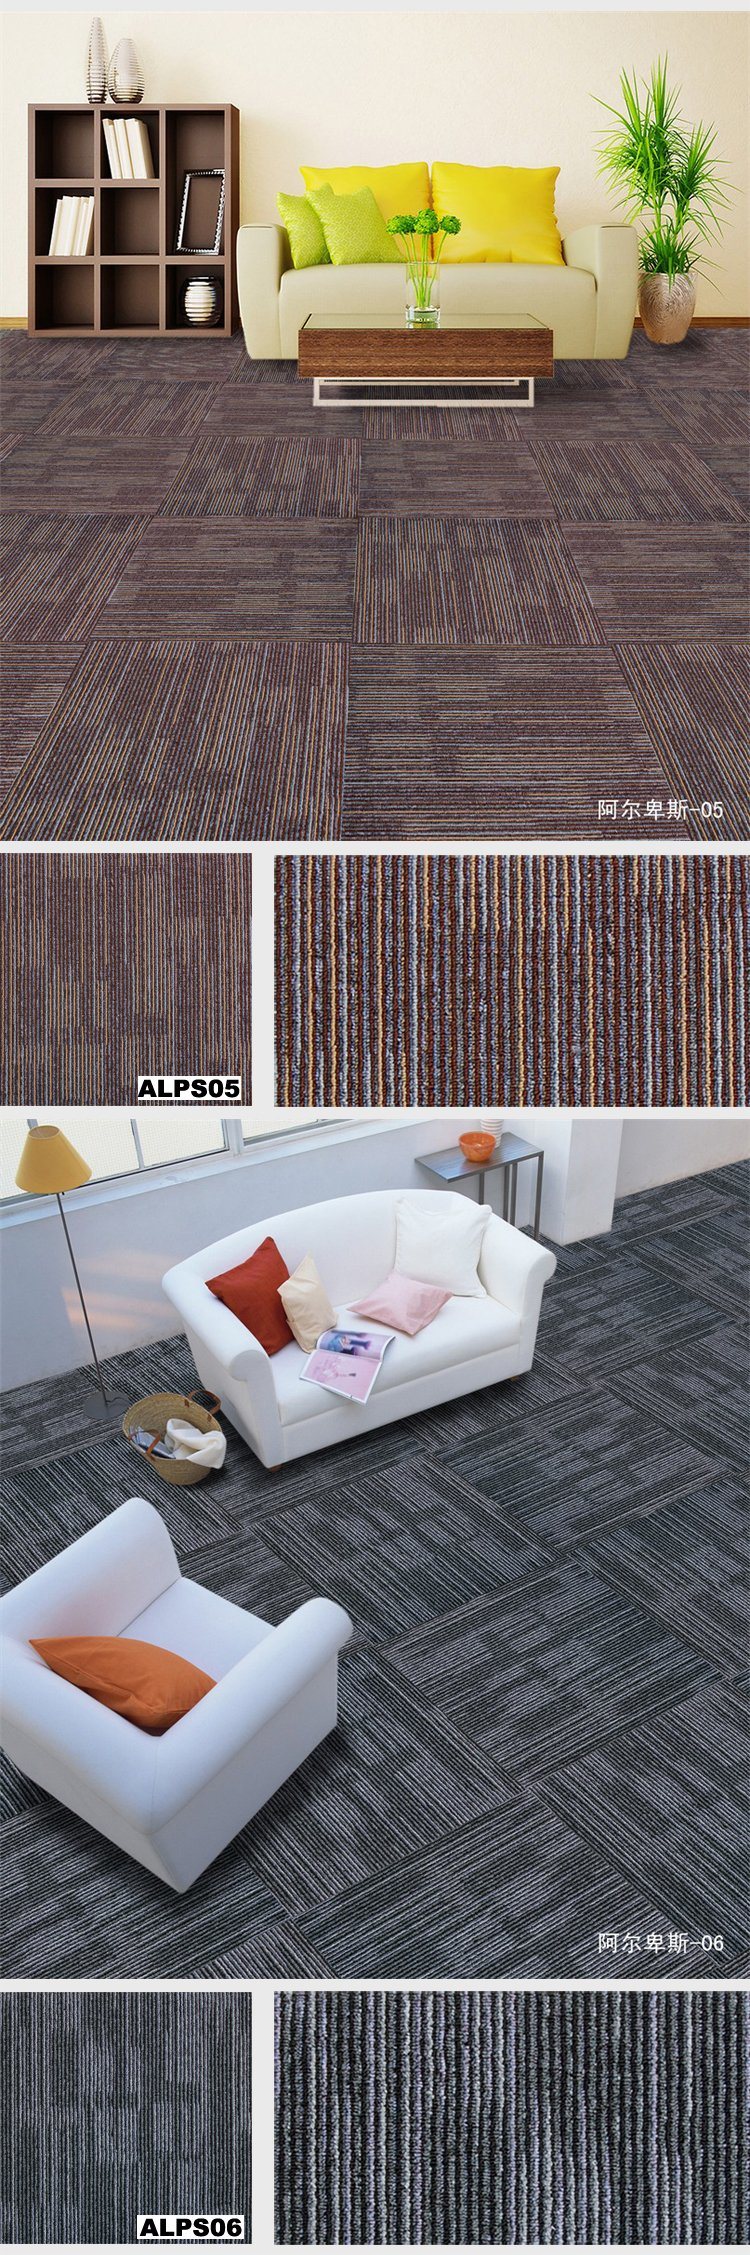 China Carpet Manufacturing Corporation PP Jacquard Washable Carpet Tile for Guest Room